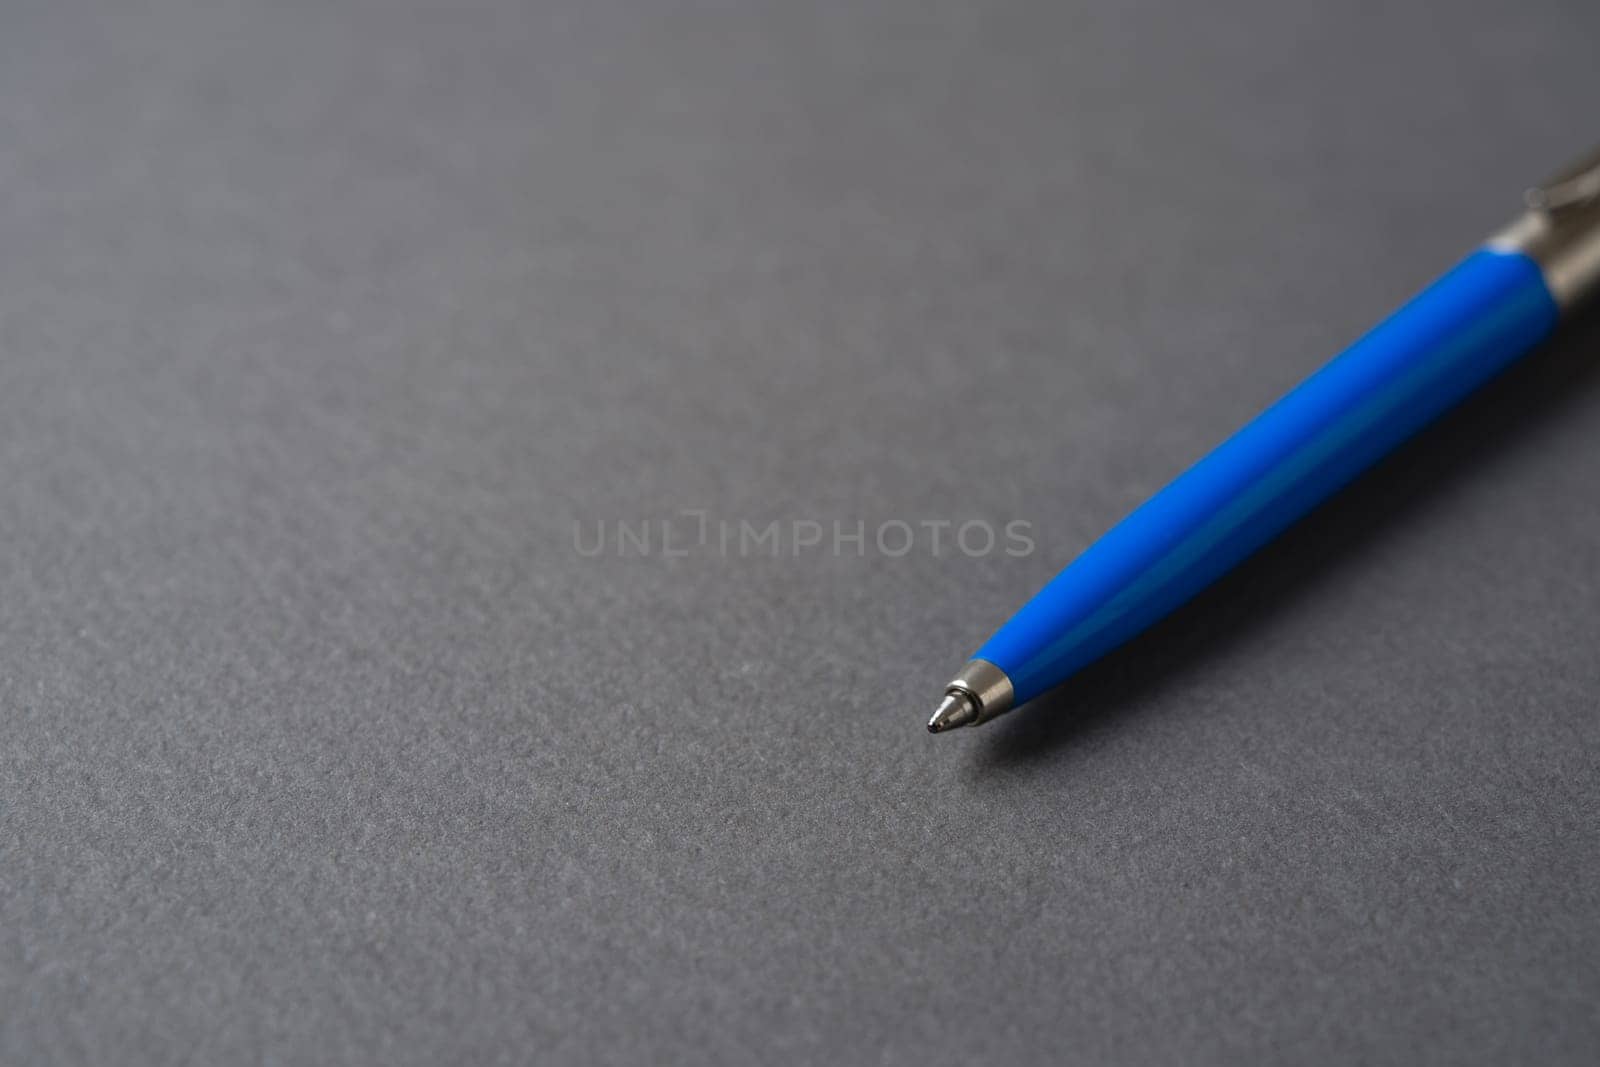 Blue plastic and metal ballpoint pen on dark gray background